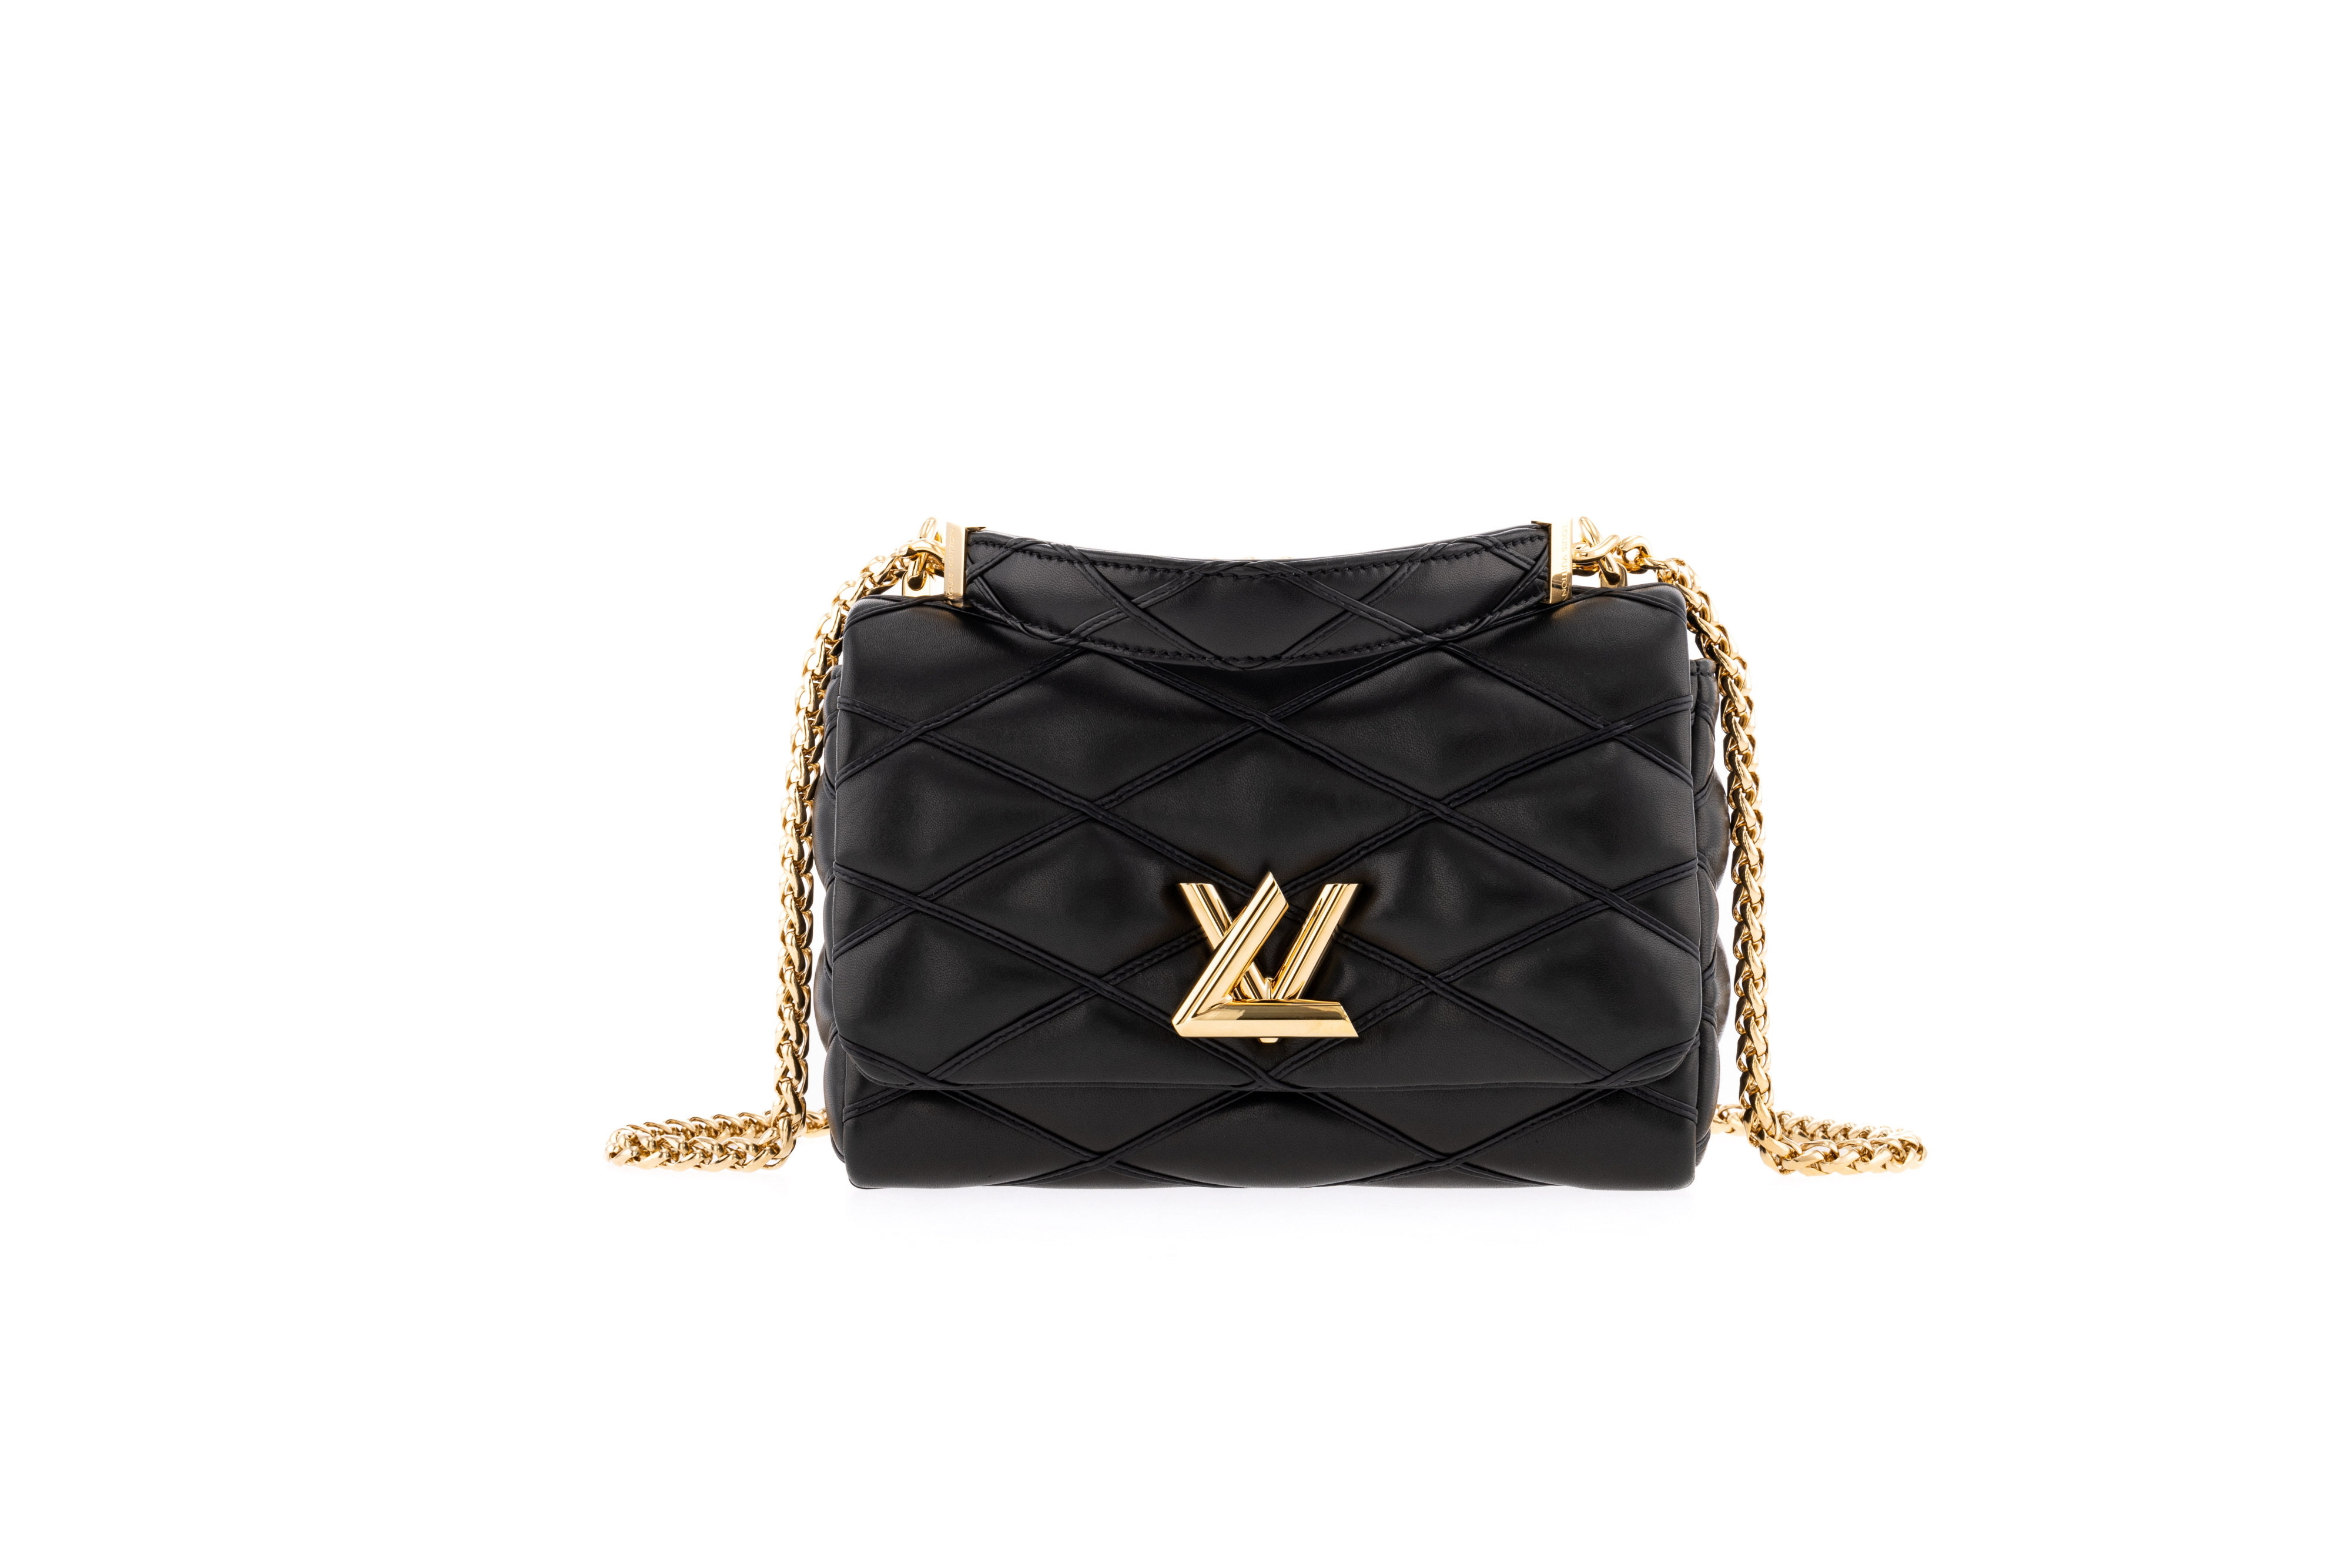 Louis Vuitton launches their new $4,300 “Volta” handbag